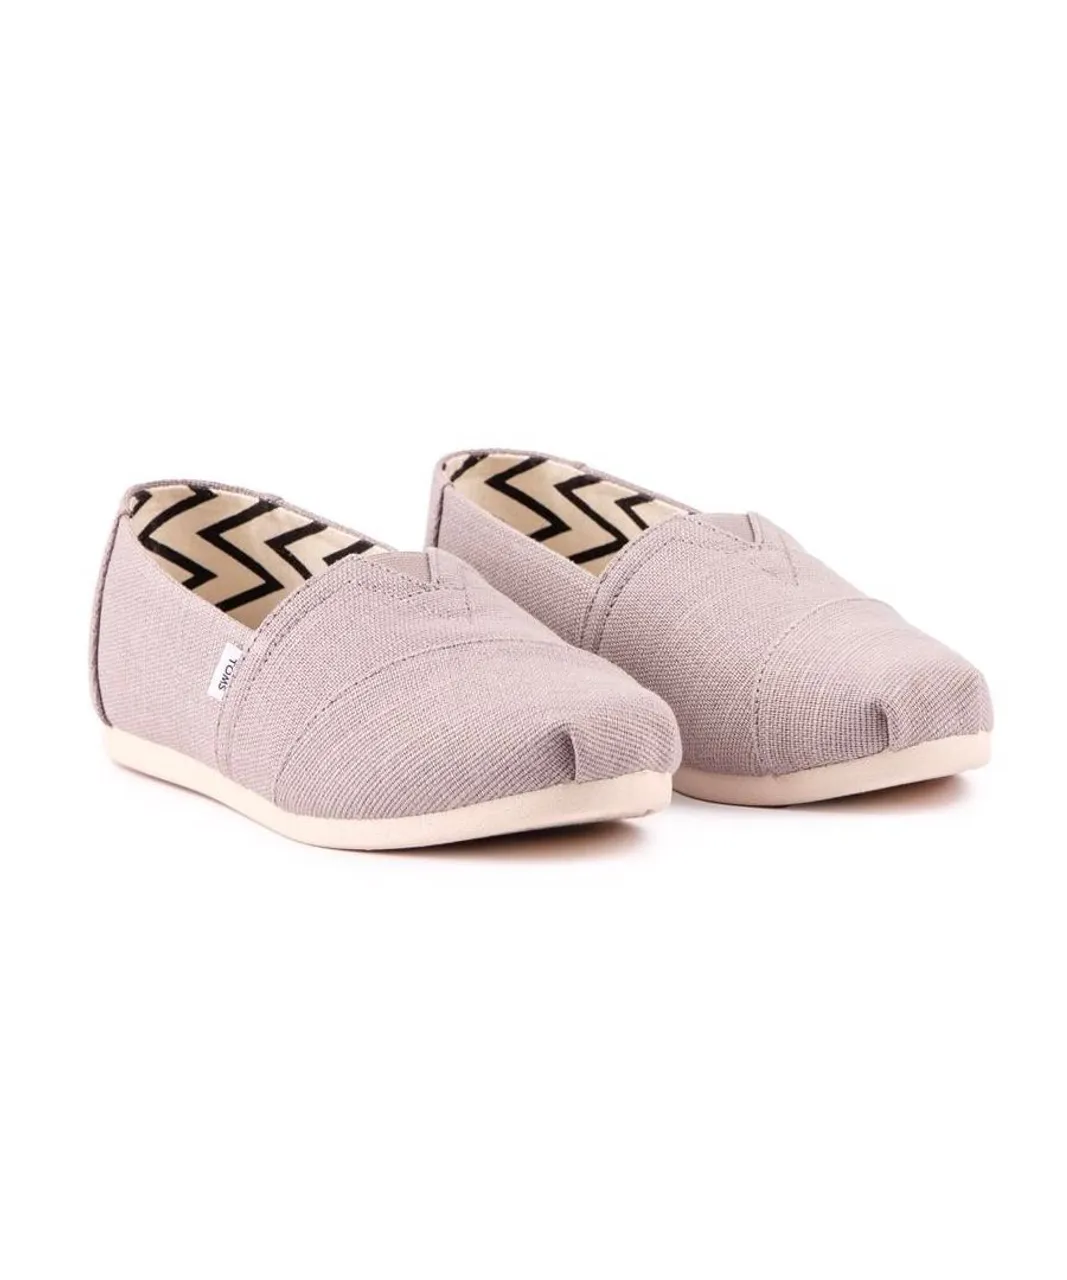 Toms Womens Alpargata Shoes - Grey